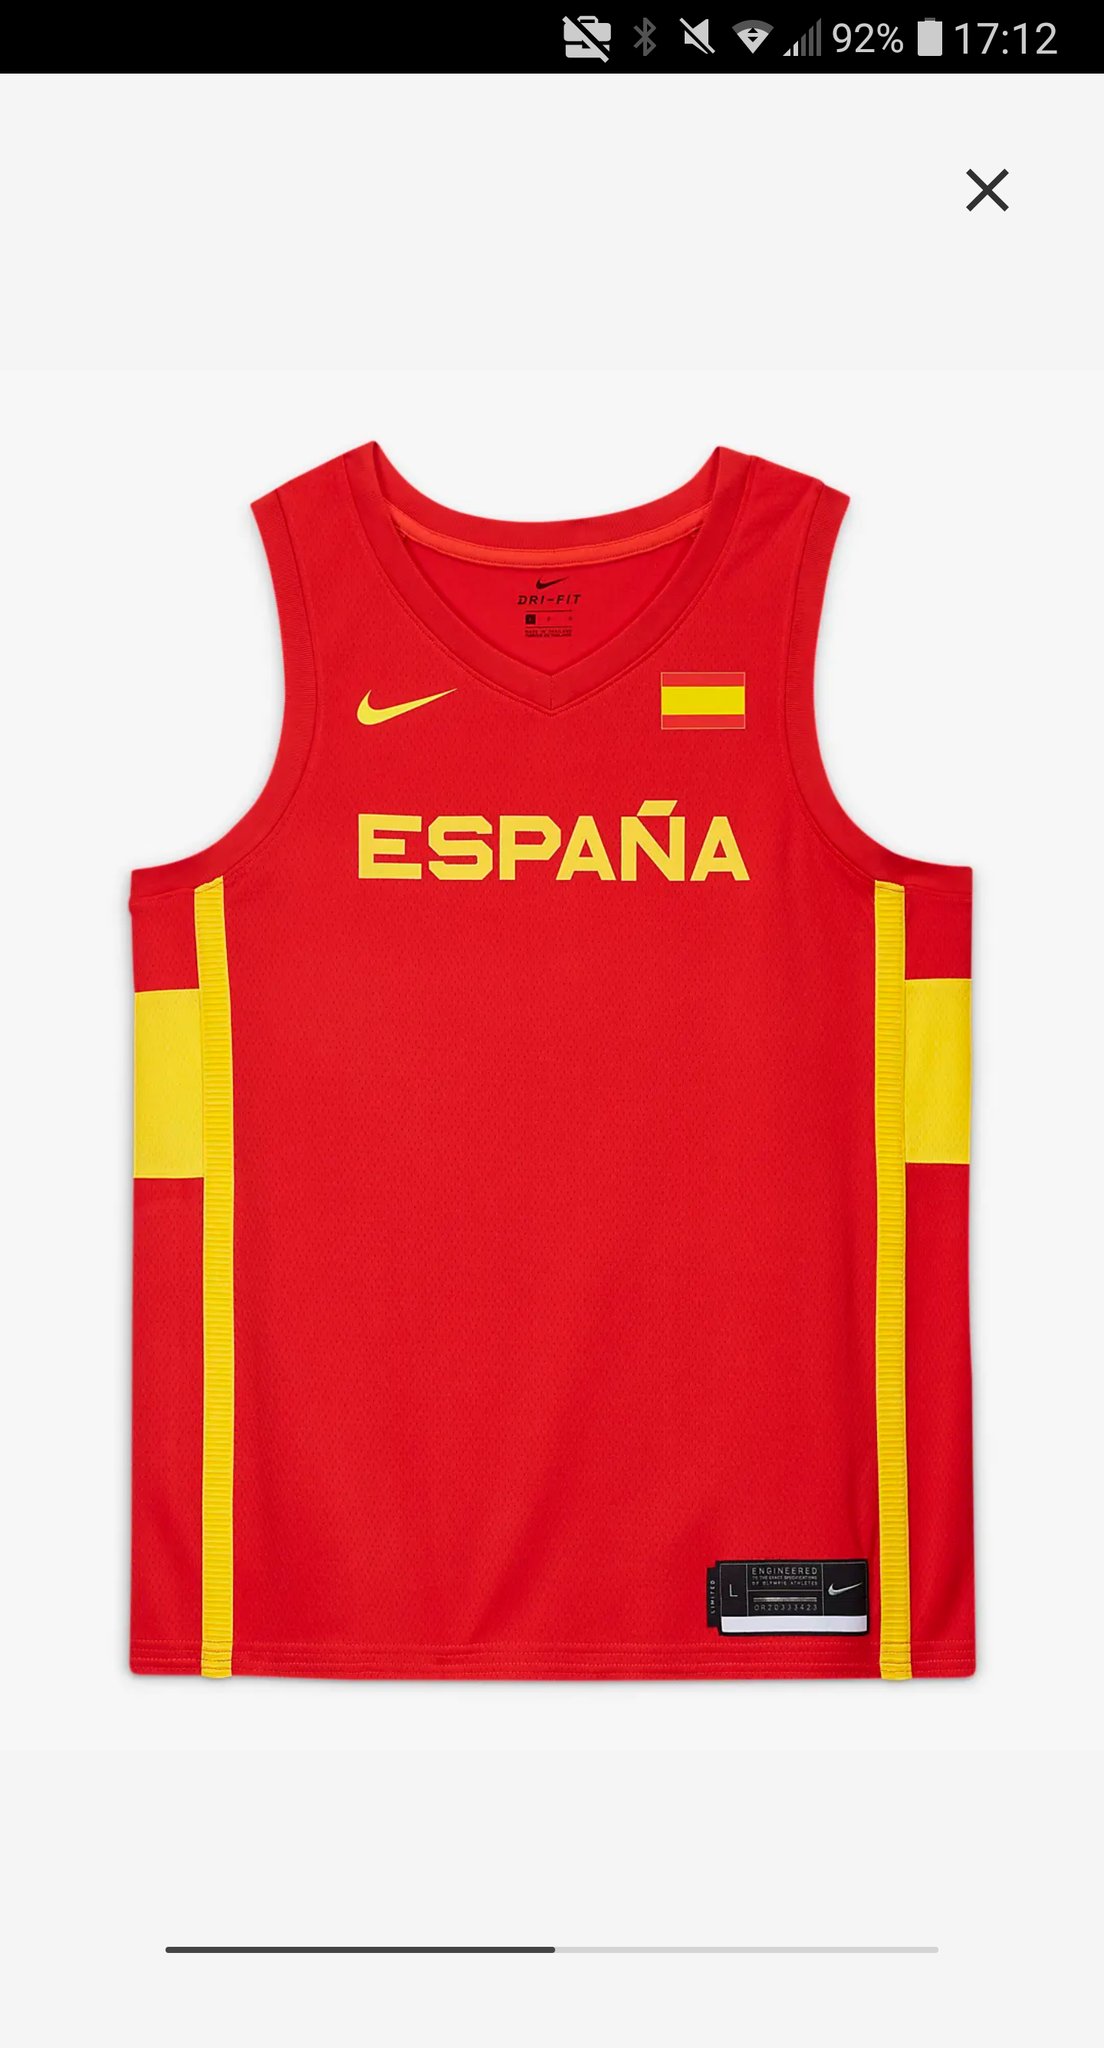 pasar por alto cazar vistazo sz9 on Twitter: "Pues ya están en Nike los uniformes de USA (fem) y España  (masc) de baloncesto. https://t.co/5mj8pVi3fn" / Twitter